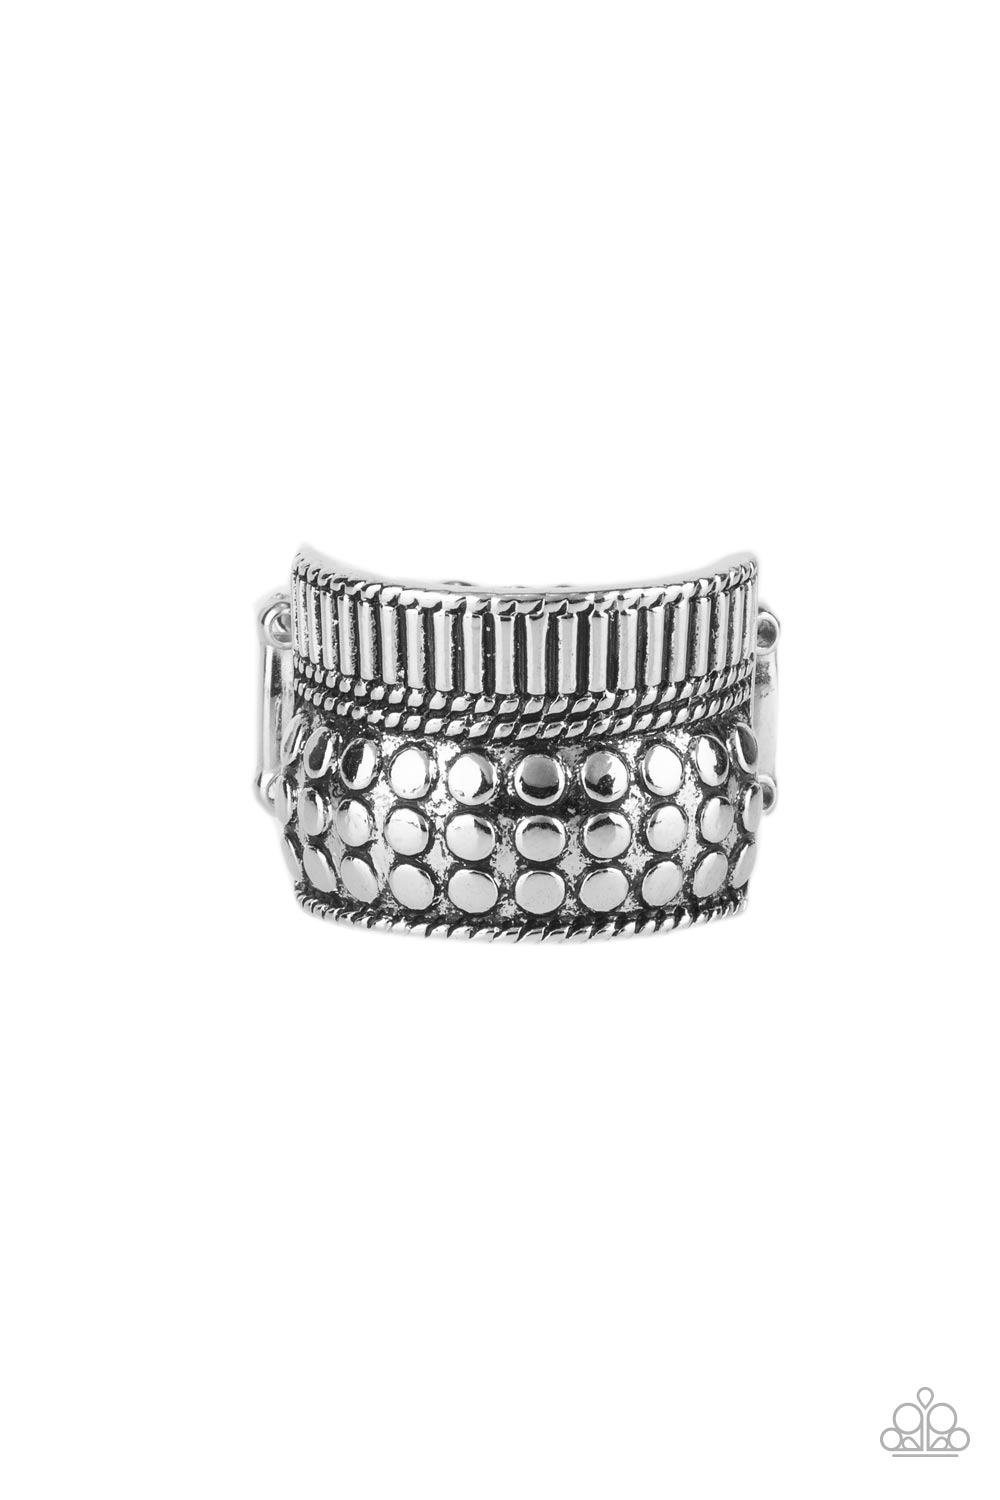 Tenacious Texture - Silver Ring